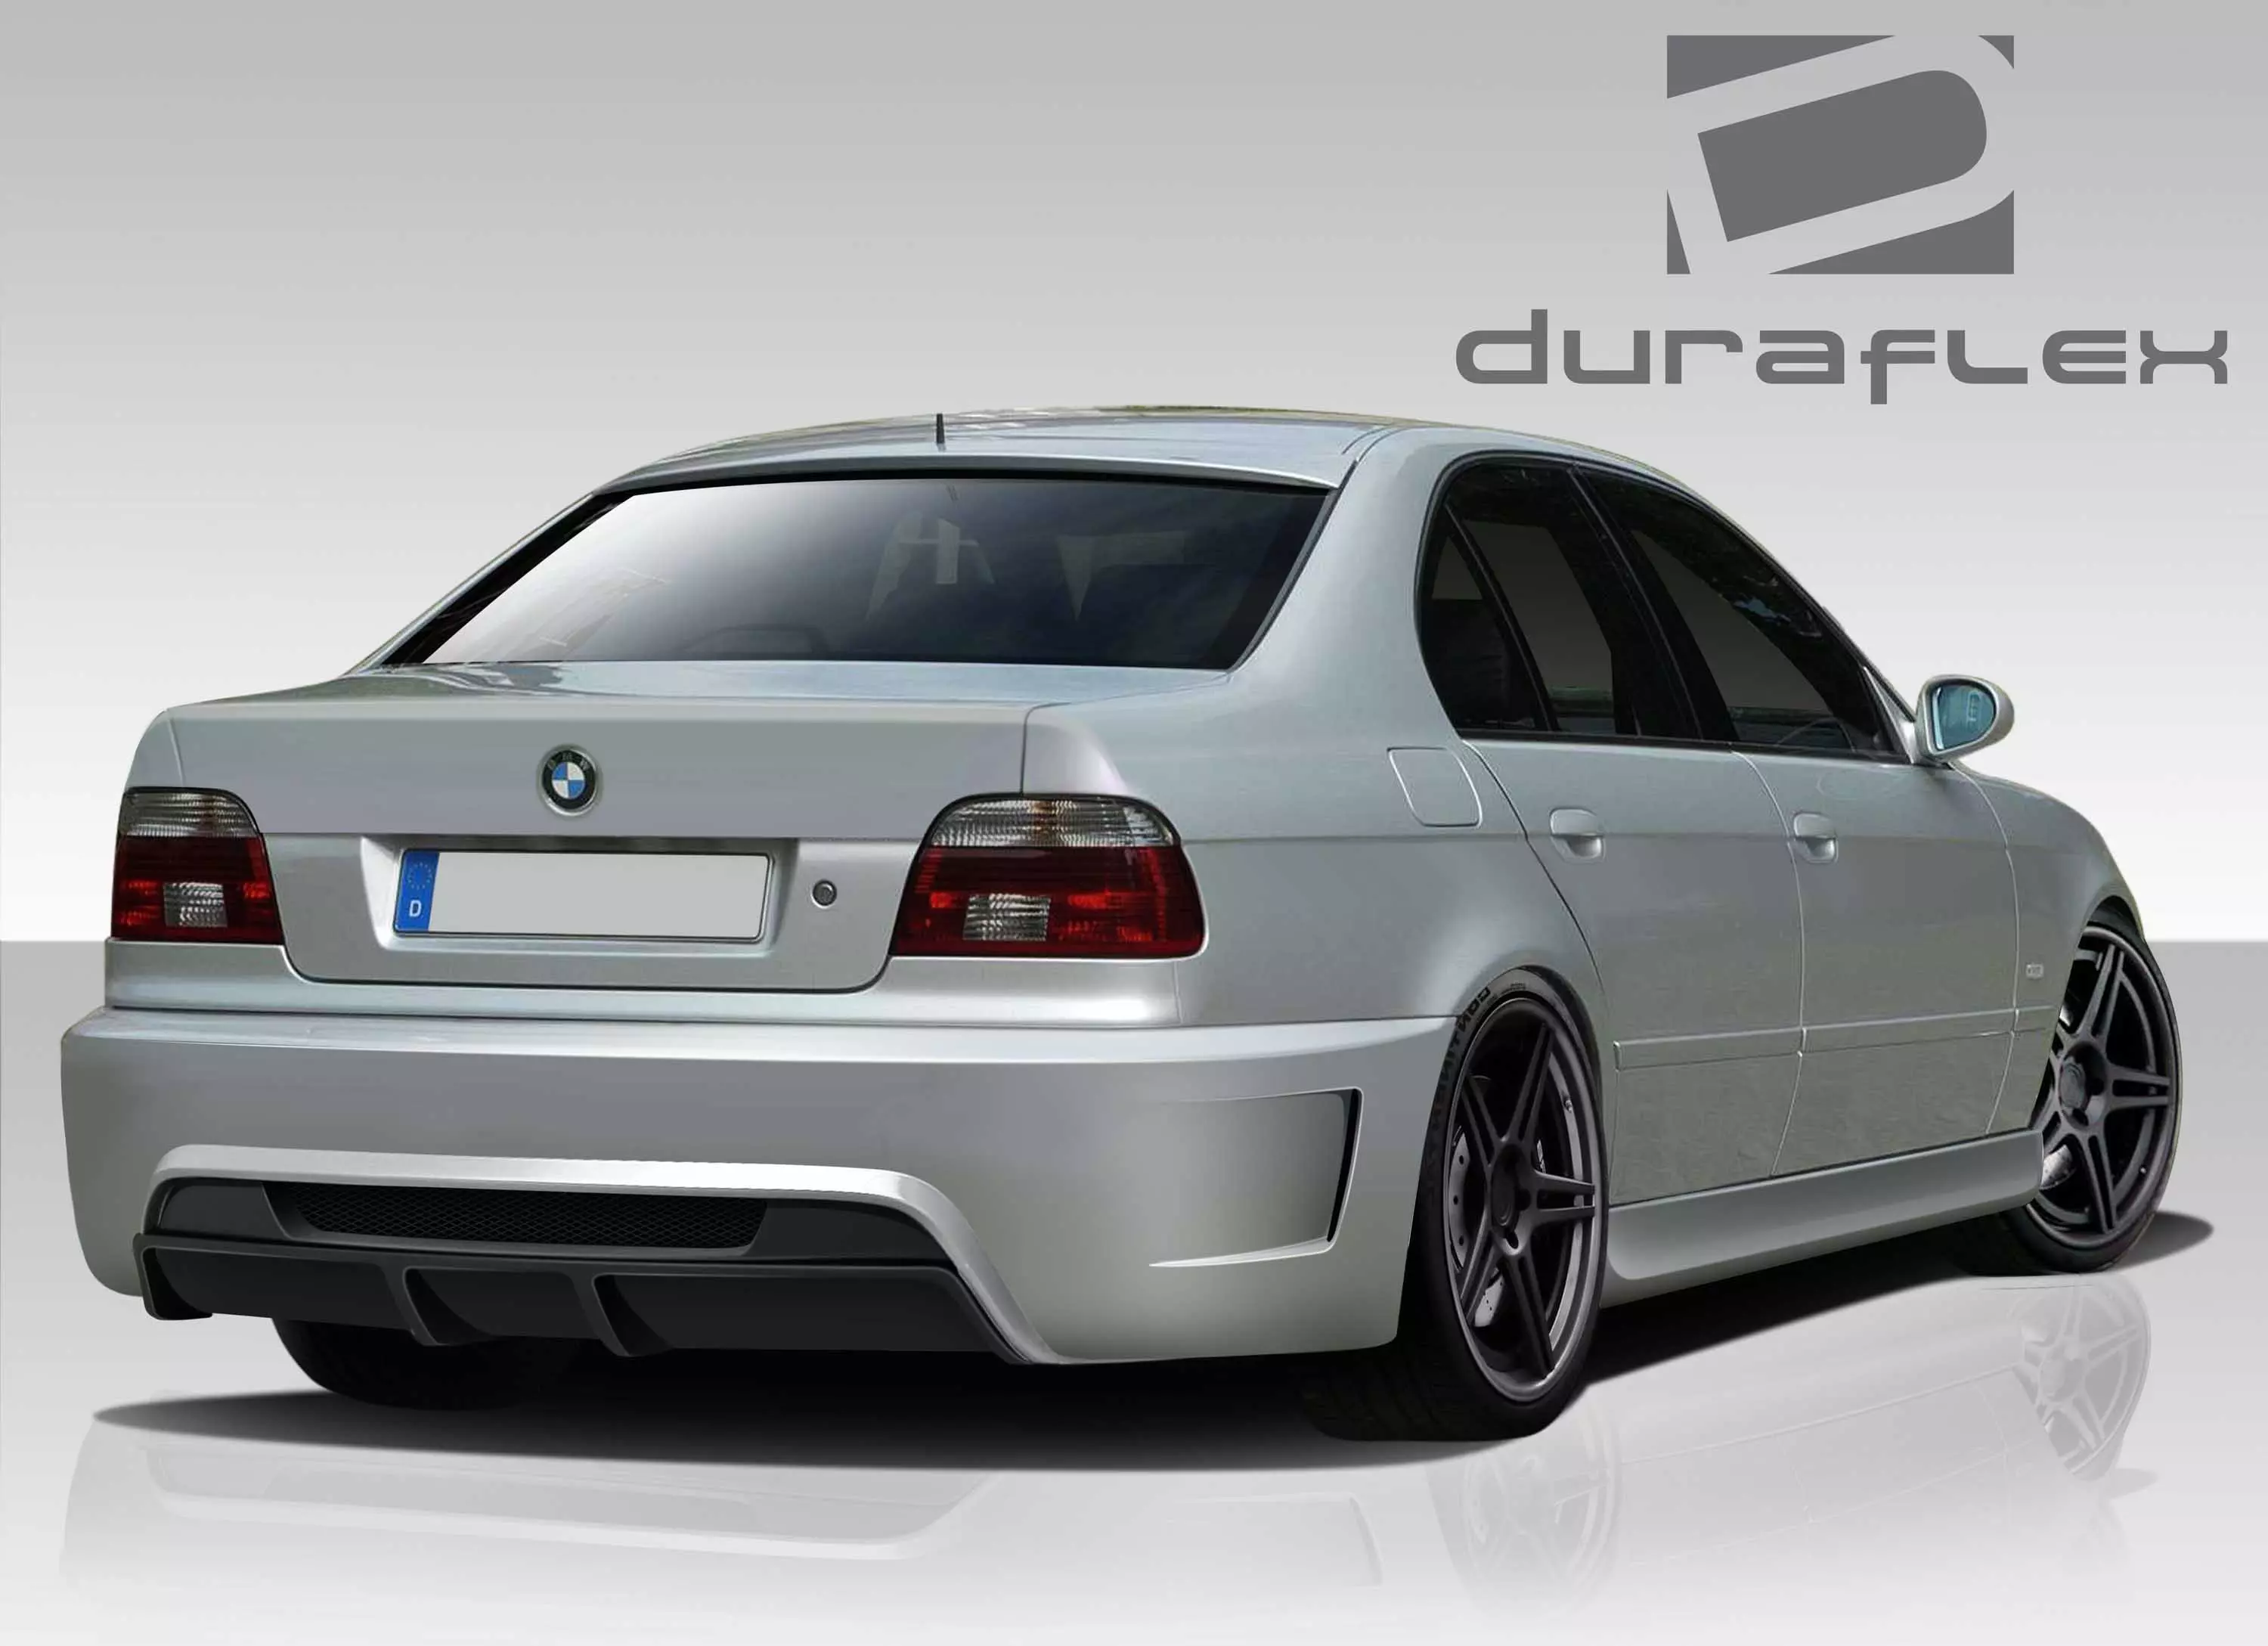 1997-2003 BMW 5 Series E39 4DR Duraflex GT-S Rear Bumper Cover 1 Piece - Image 2